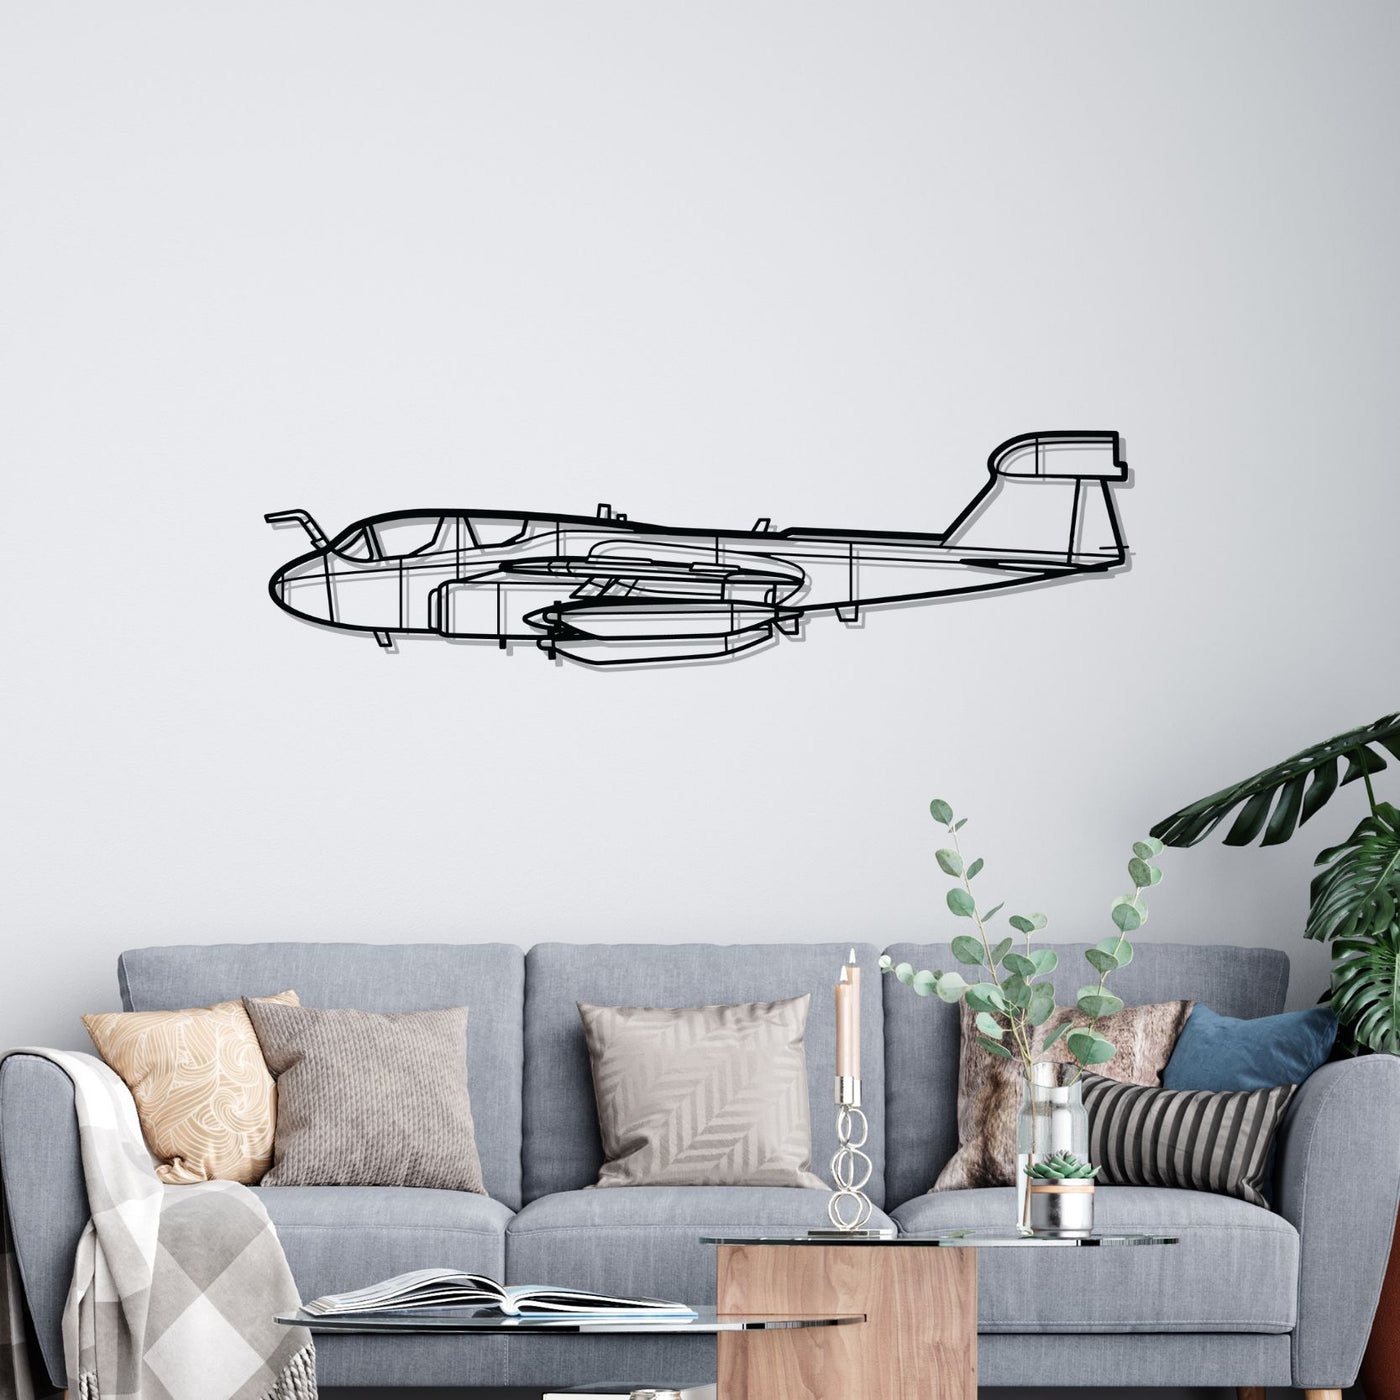 EA-6B Prowler Silhouette Metal Wall Art